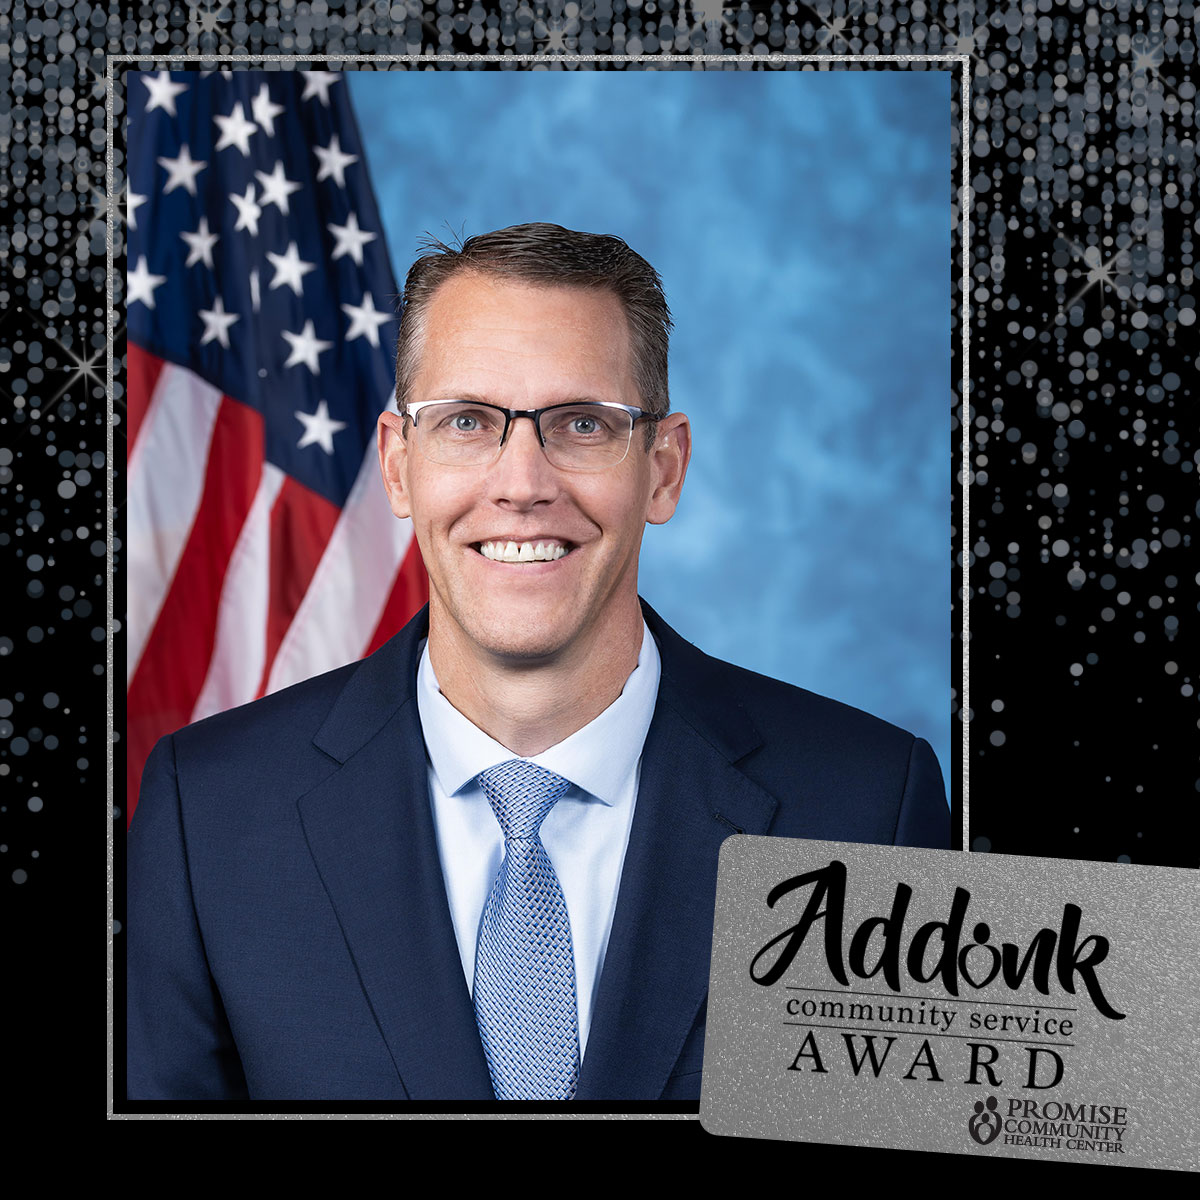 Congressman Randy Feenstra | Promise Community Health Center | Addink Community Service Award Winner 2022